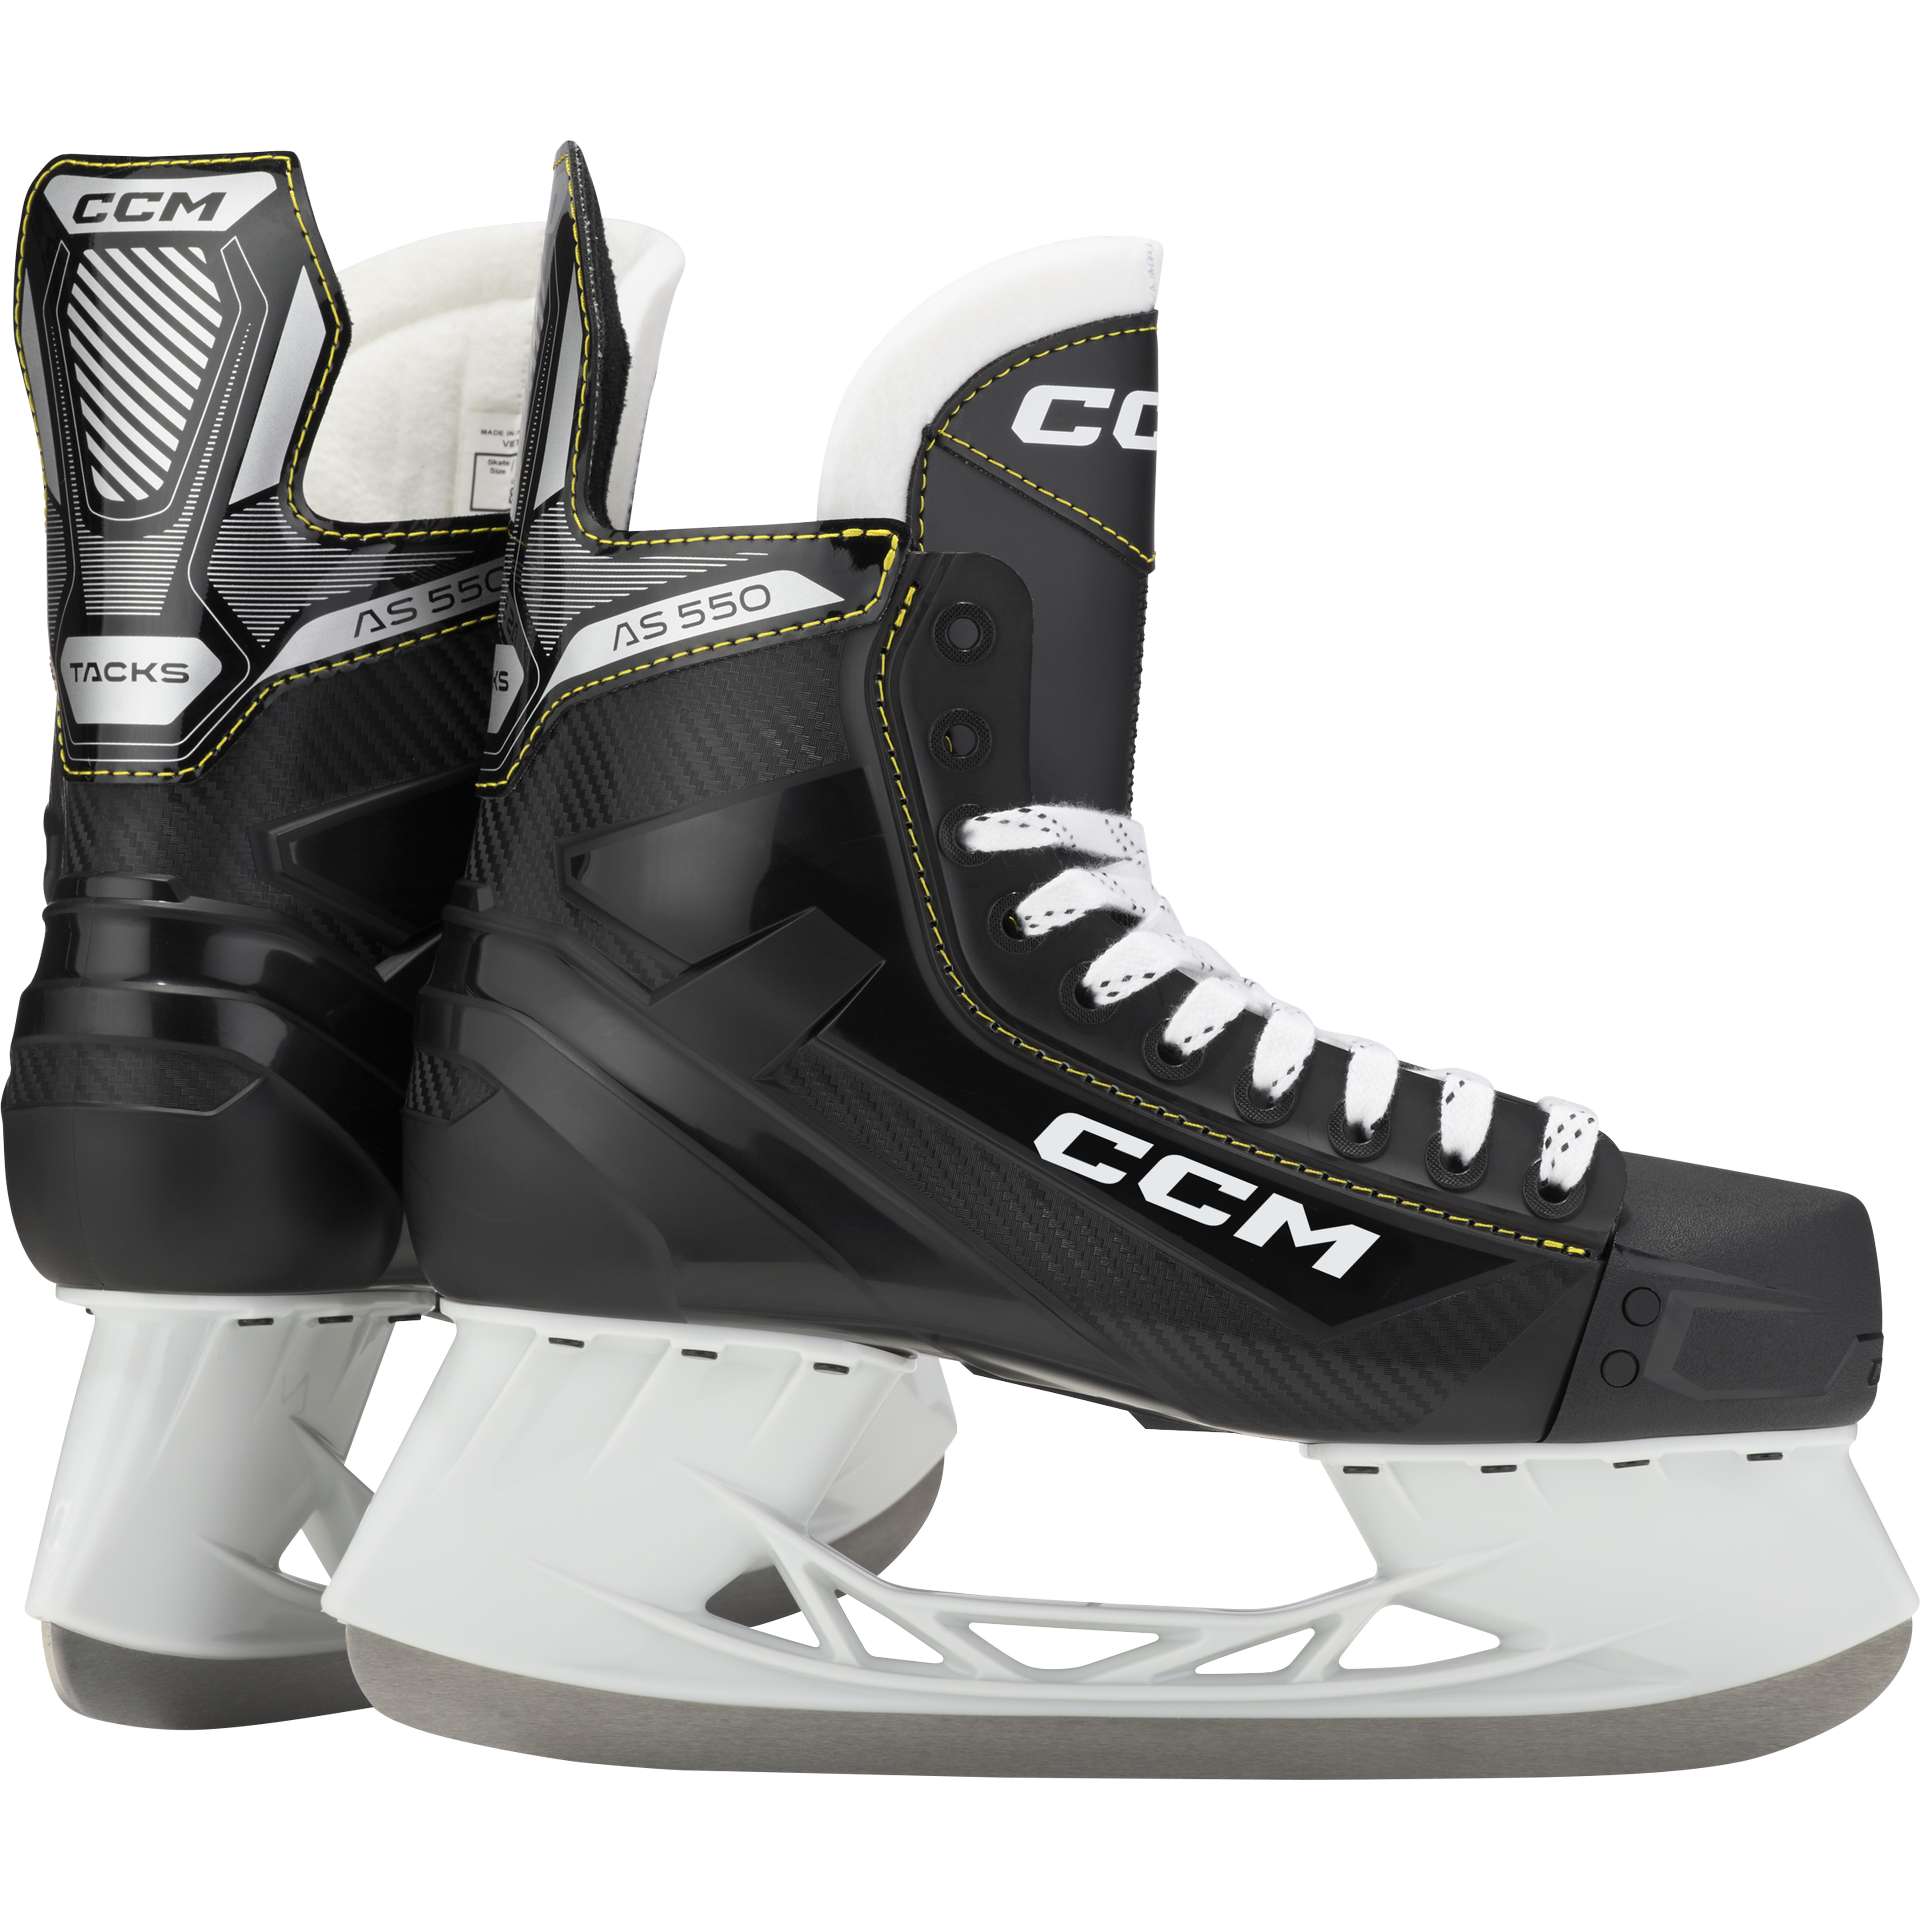 CCM Tacks AS-550 Eishockeyschlittschuhe Jr.